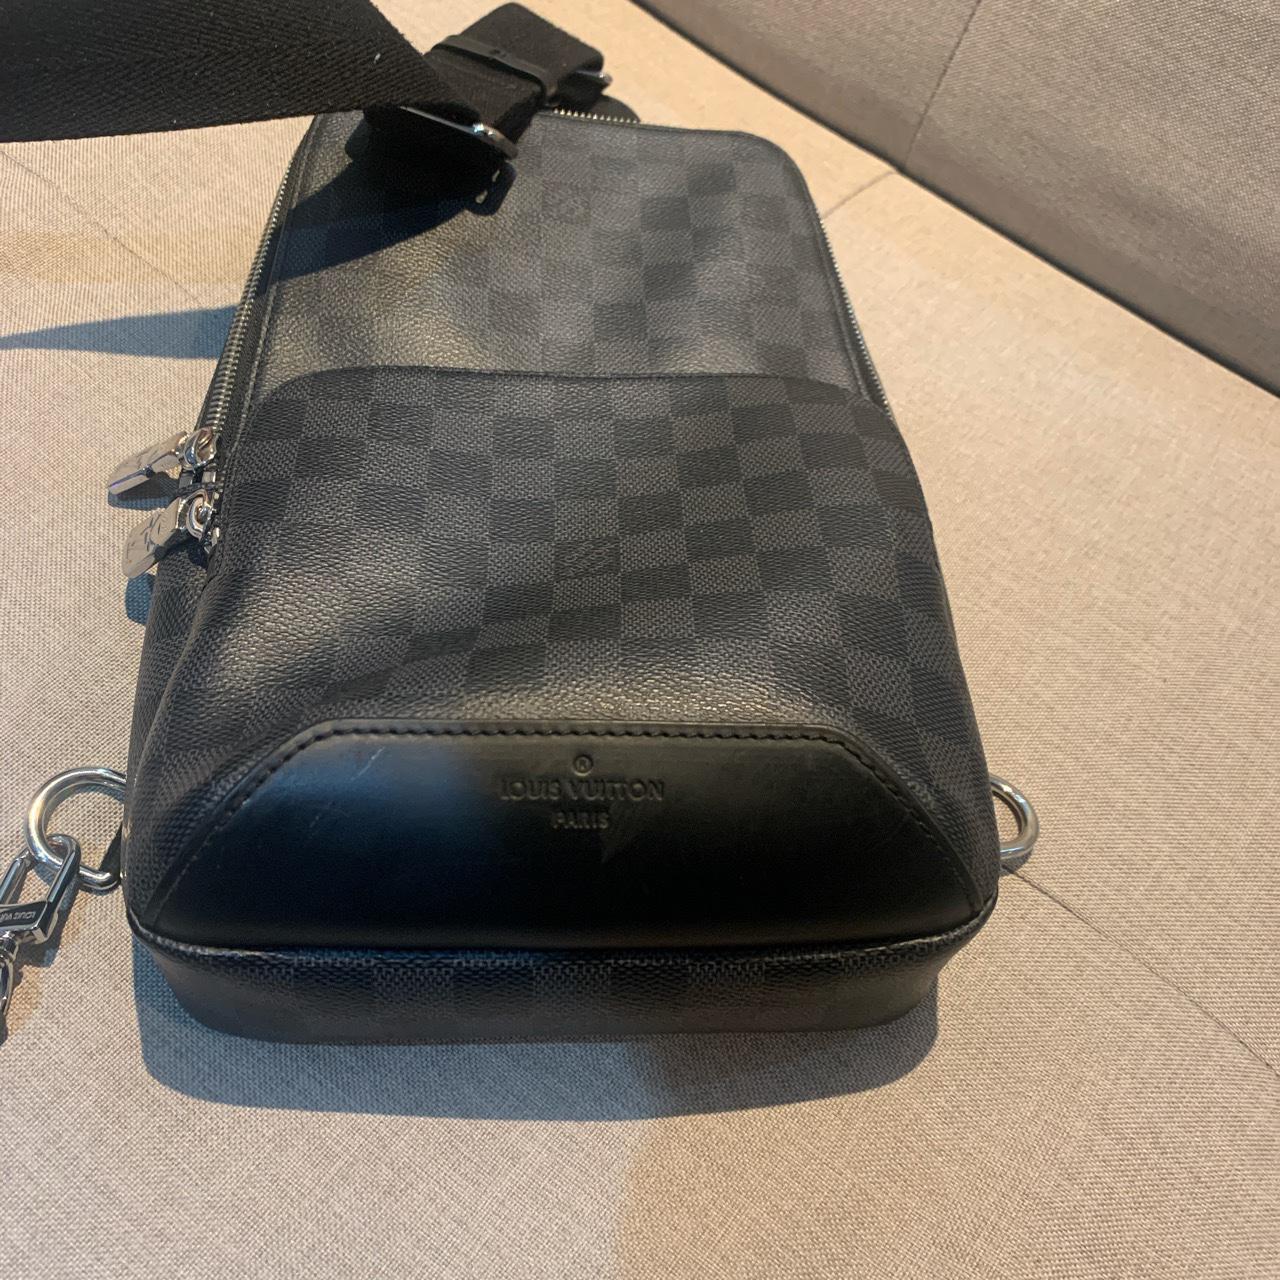 Louis Vuitton Men's New Aerogram Sling Bag - Depop